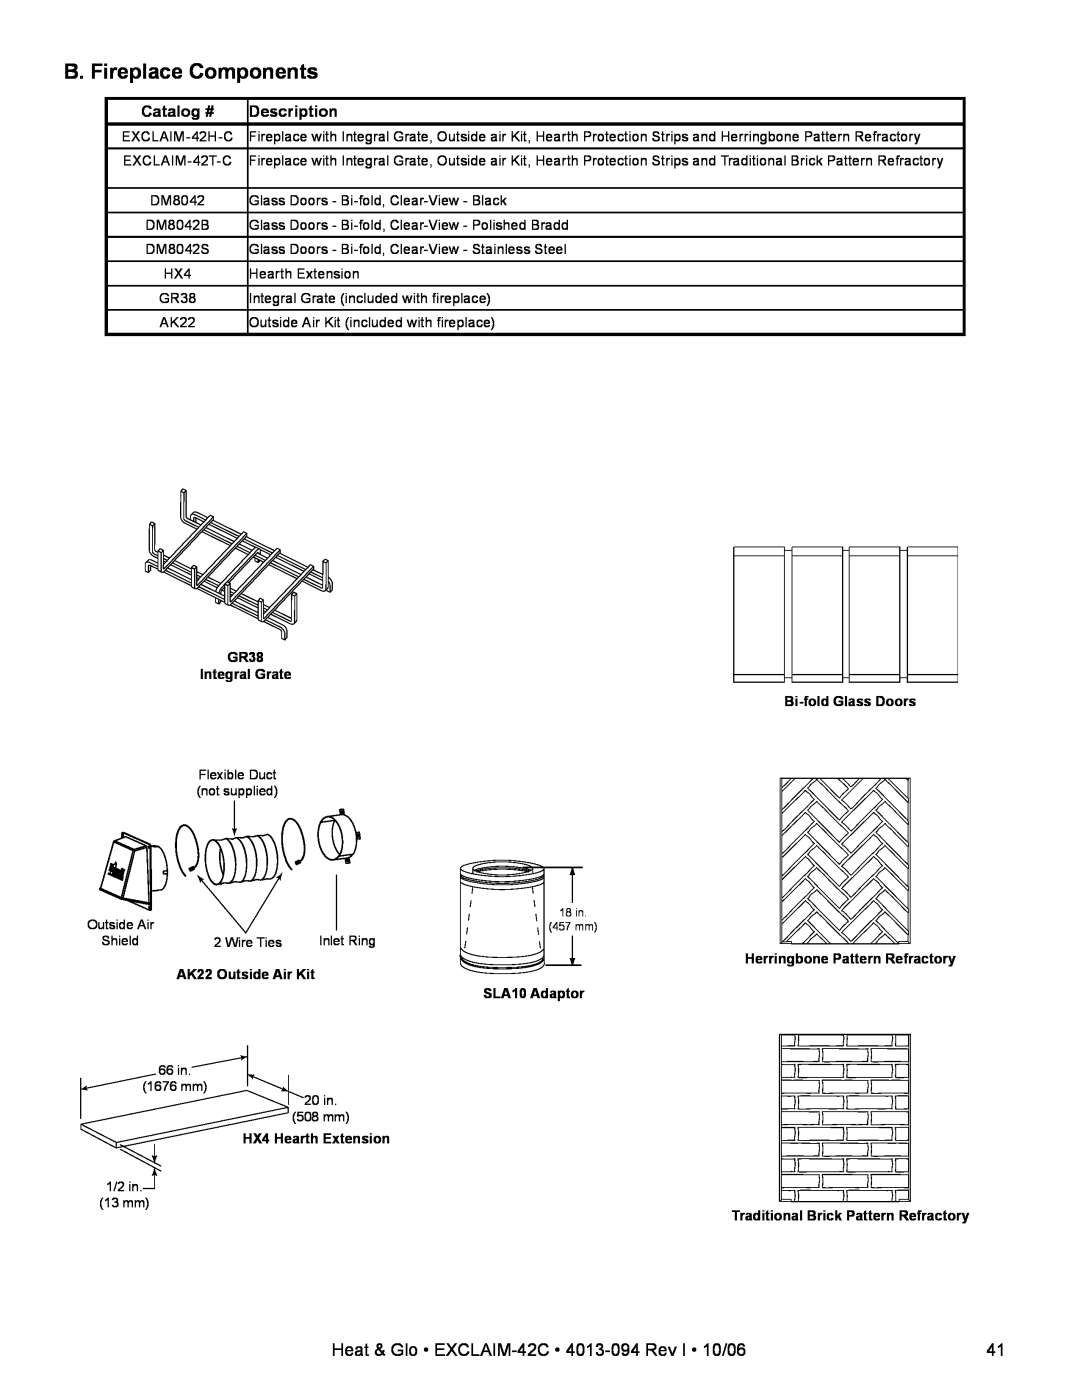 Heat & Glo LifeStyle EXCLAIM-42T-C Catalog #, Description, GR38 Integral Grate Bi-foldGlass Doors, HX4 Hearth Extension 